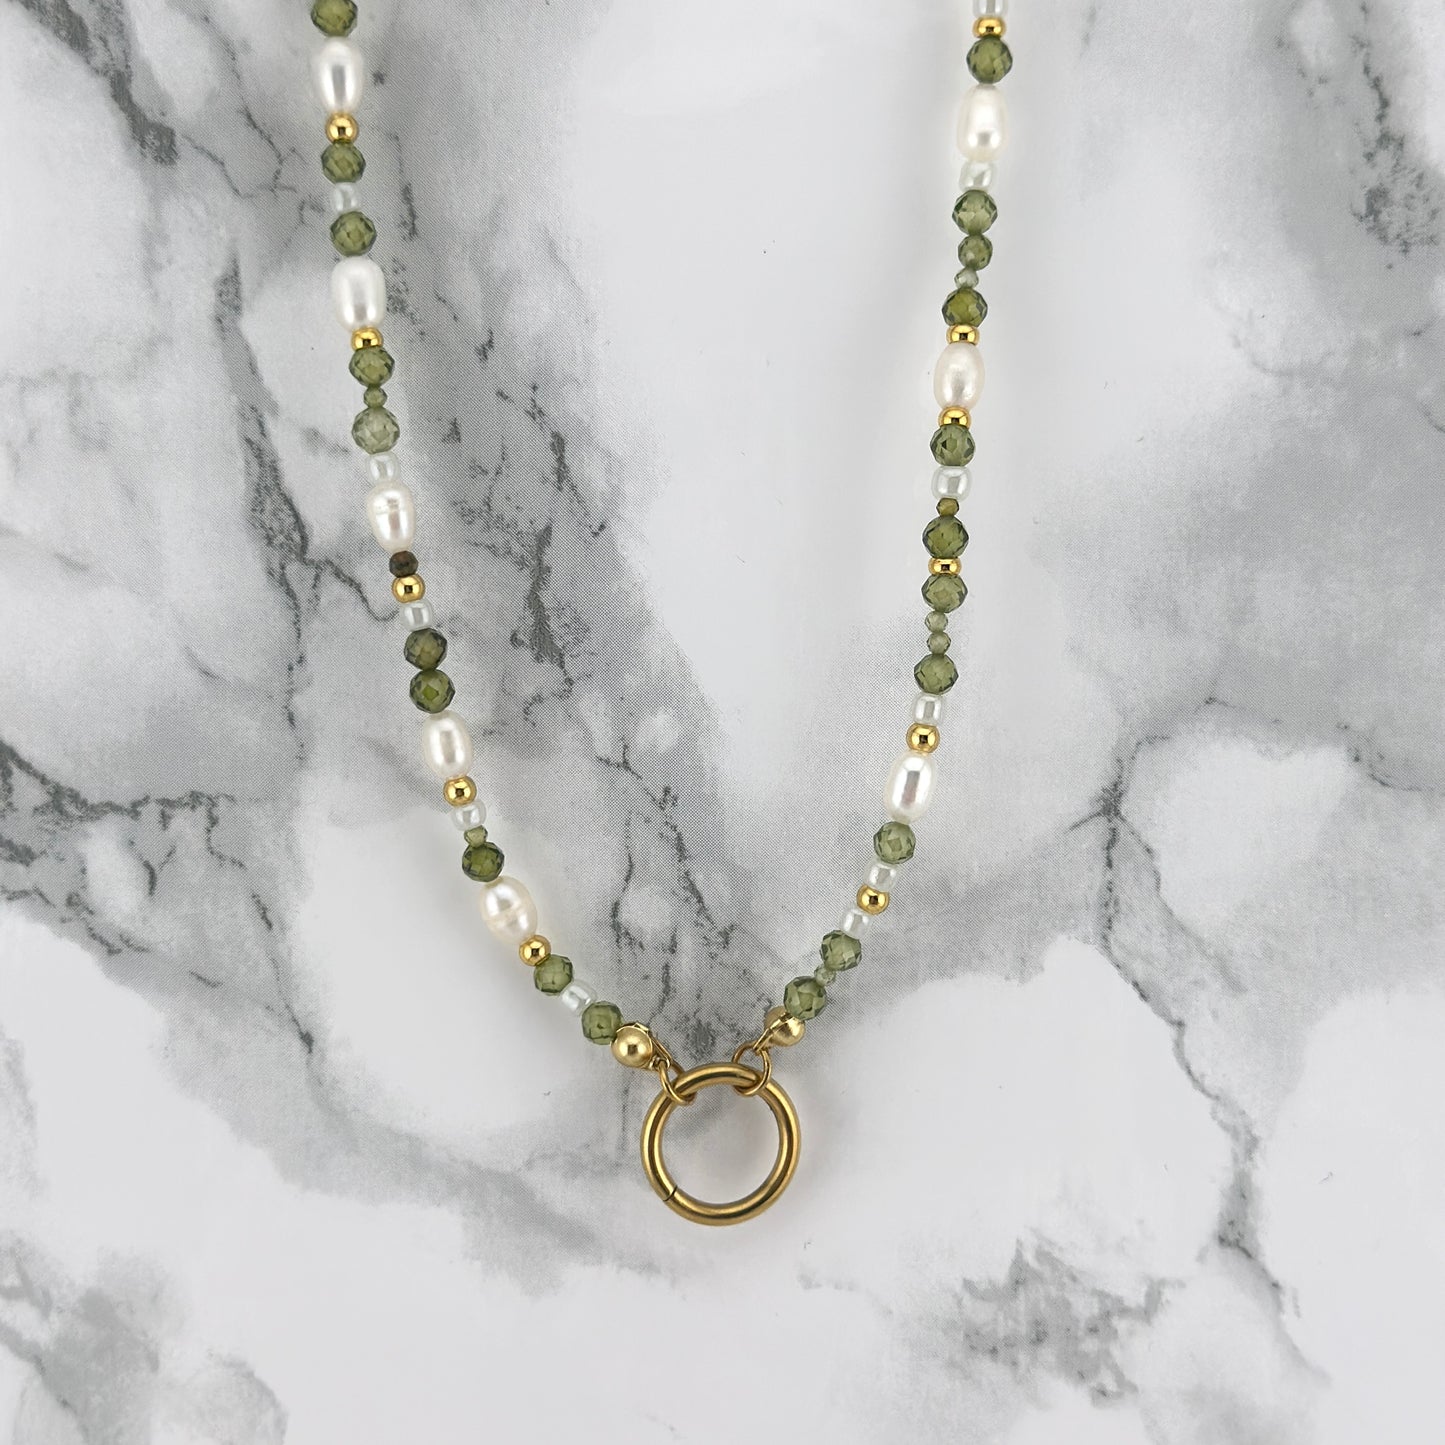 Handmade Green-Gold necklace